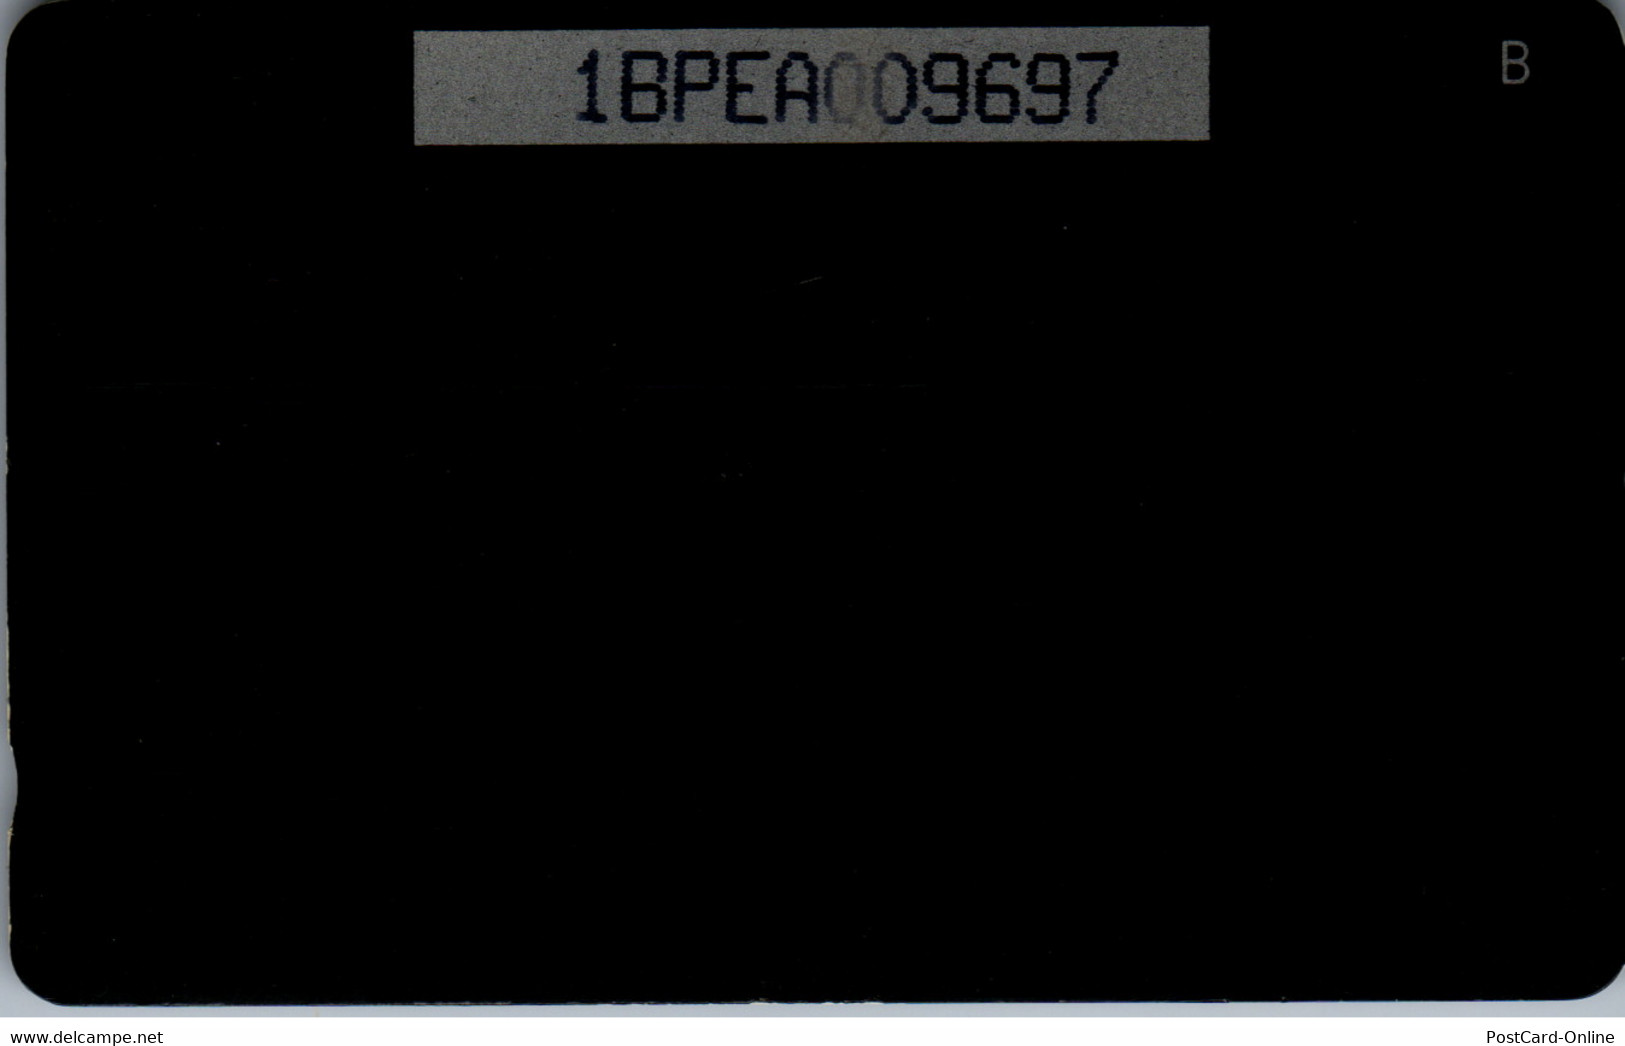 17960 - Großbritannien - BP Exploration Payphone Card - Piattaforme Petrolifere